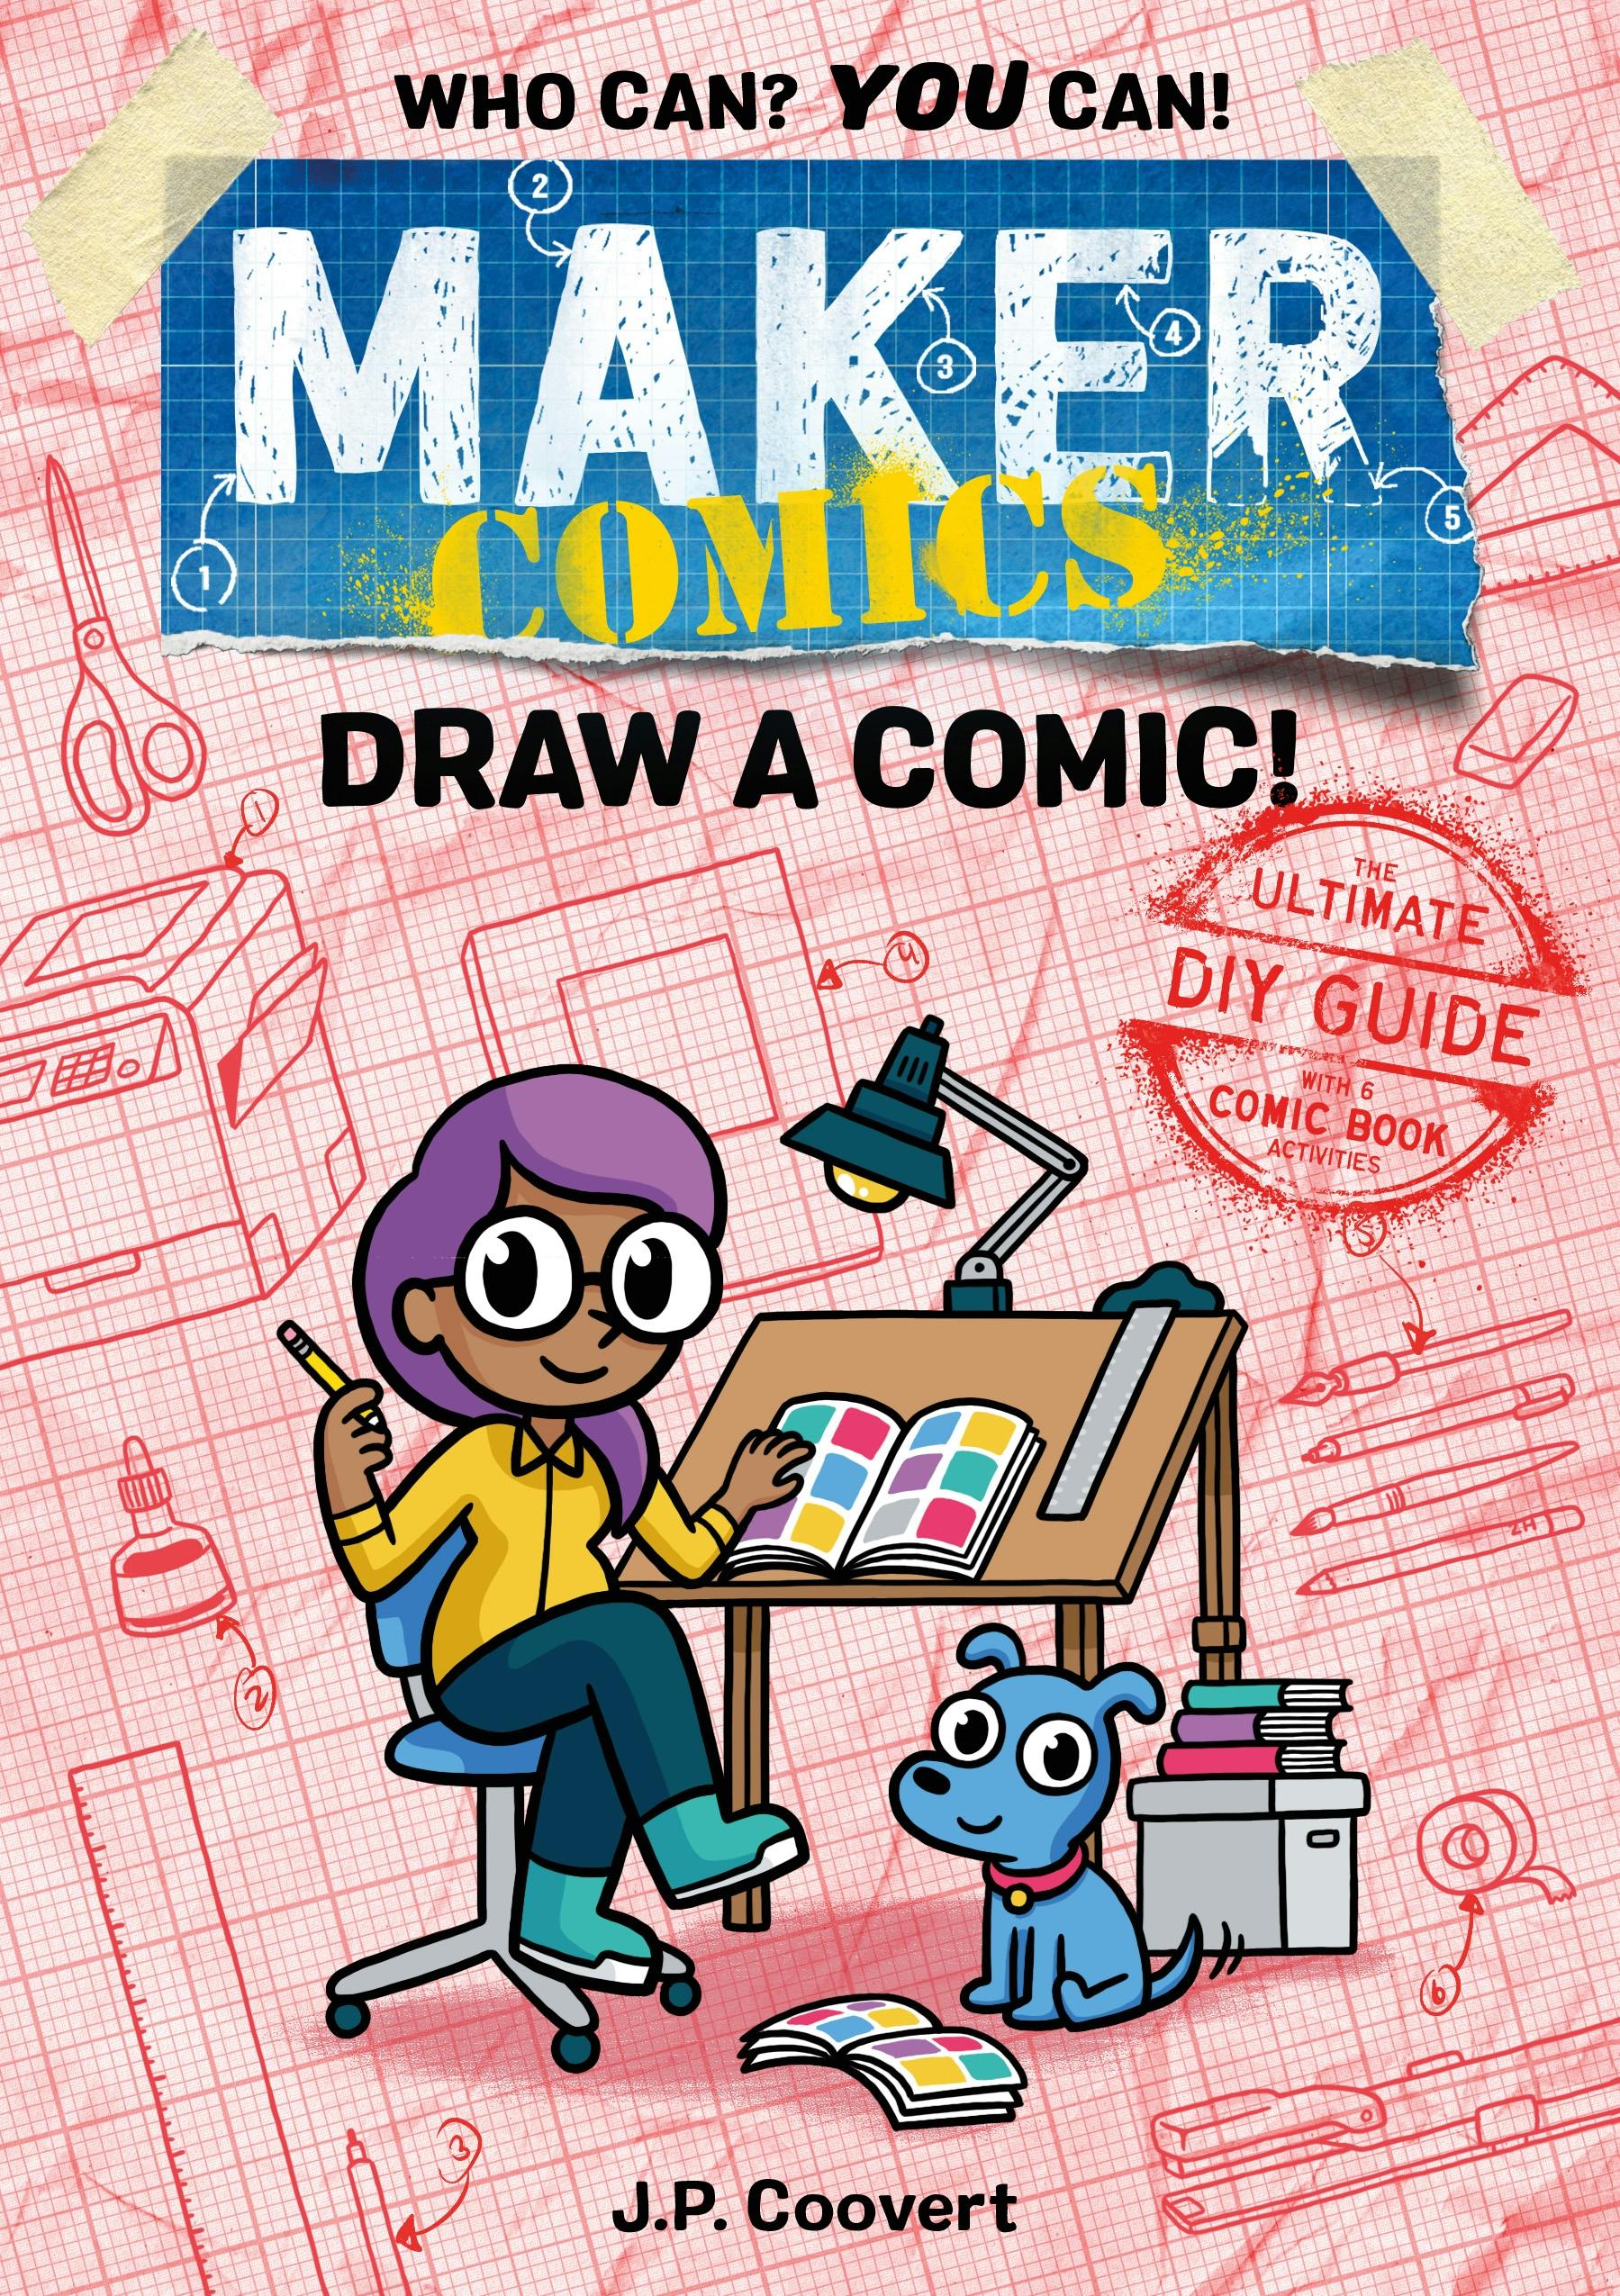 Comic Strip Creative Writing & Drawing Fun + Planner - Rock Your Homeschool